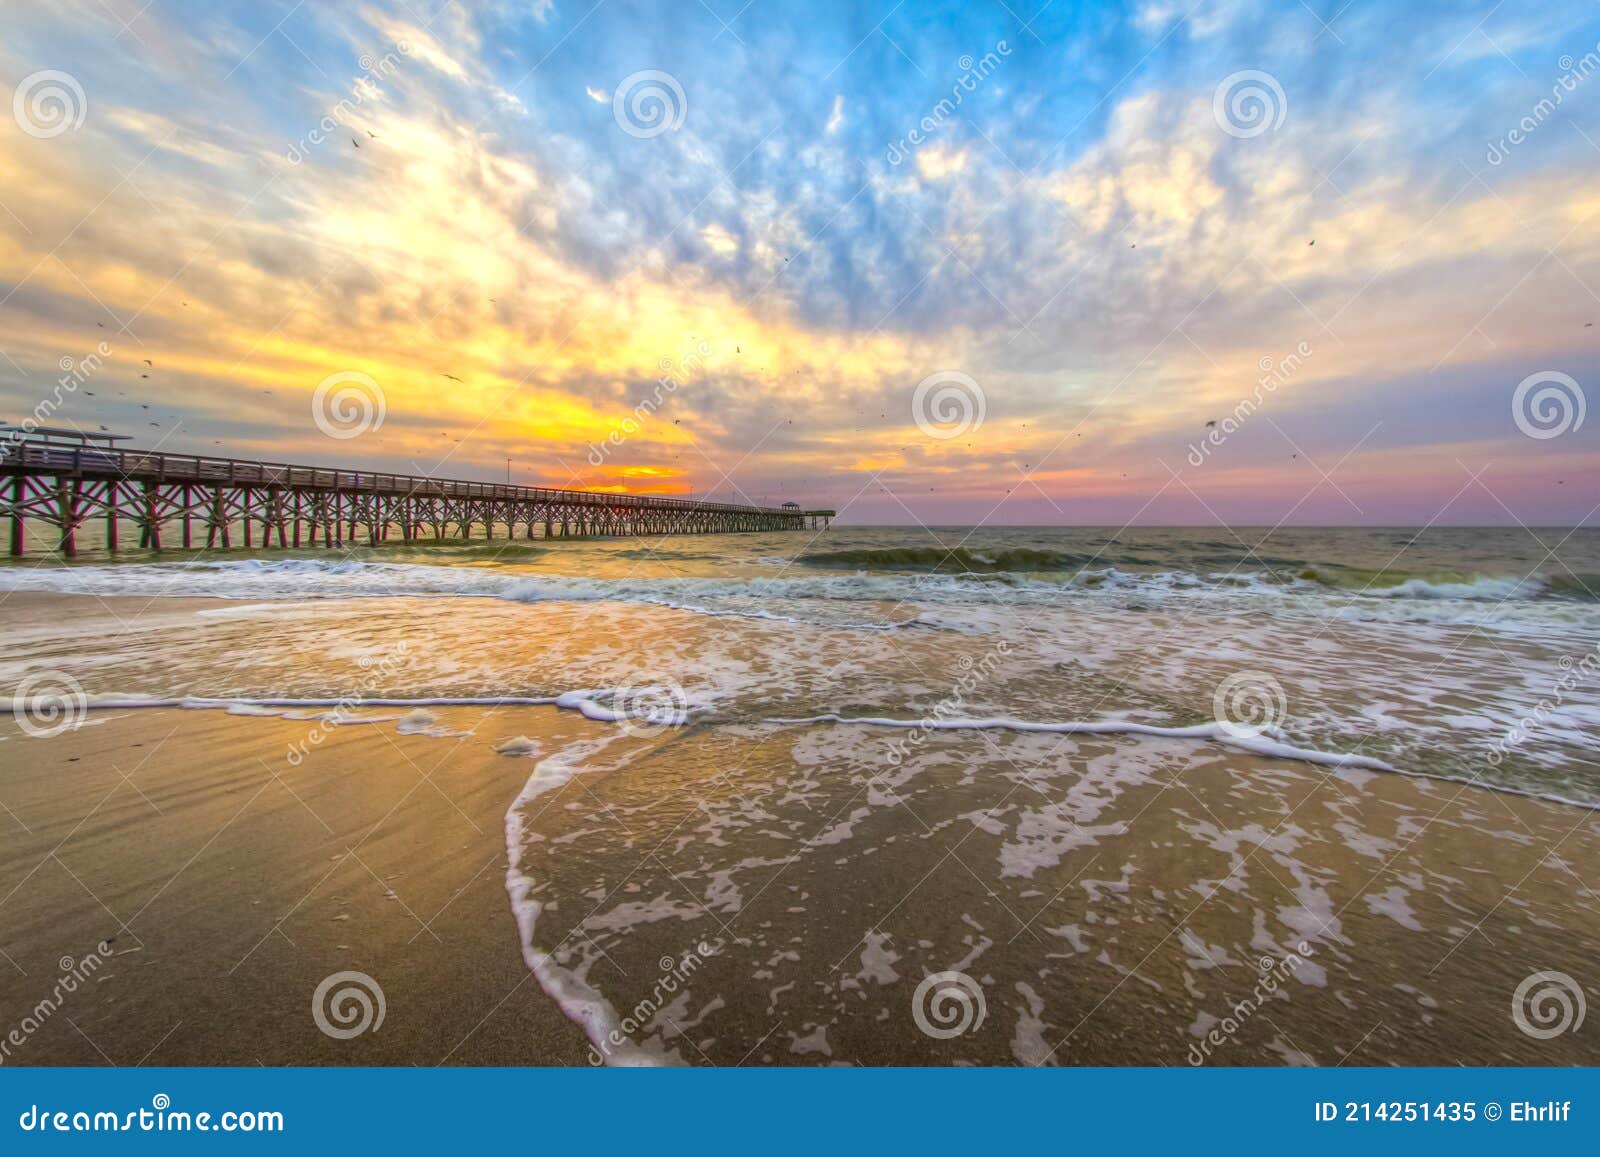 myrtle beach fishing pier sunrise landscape